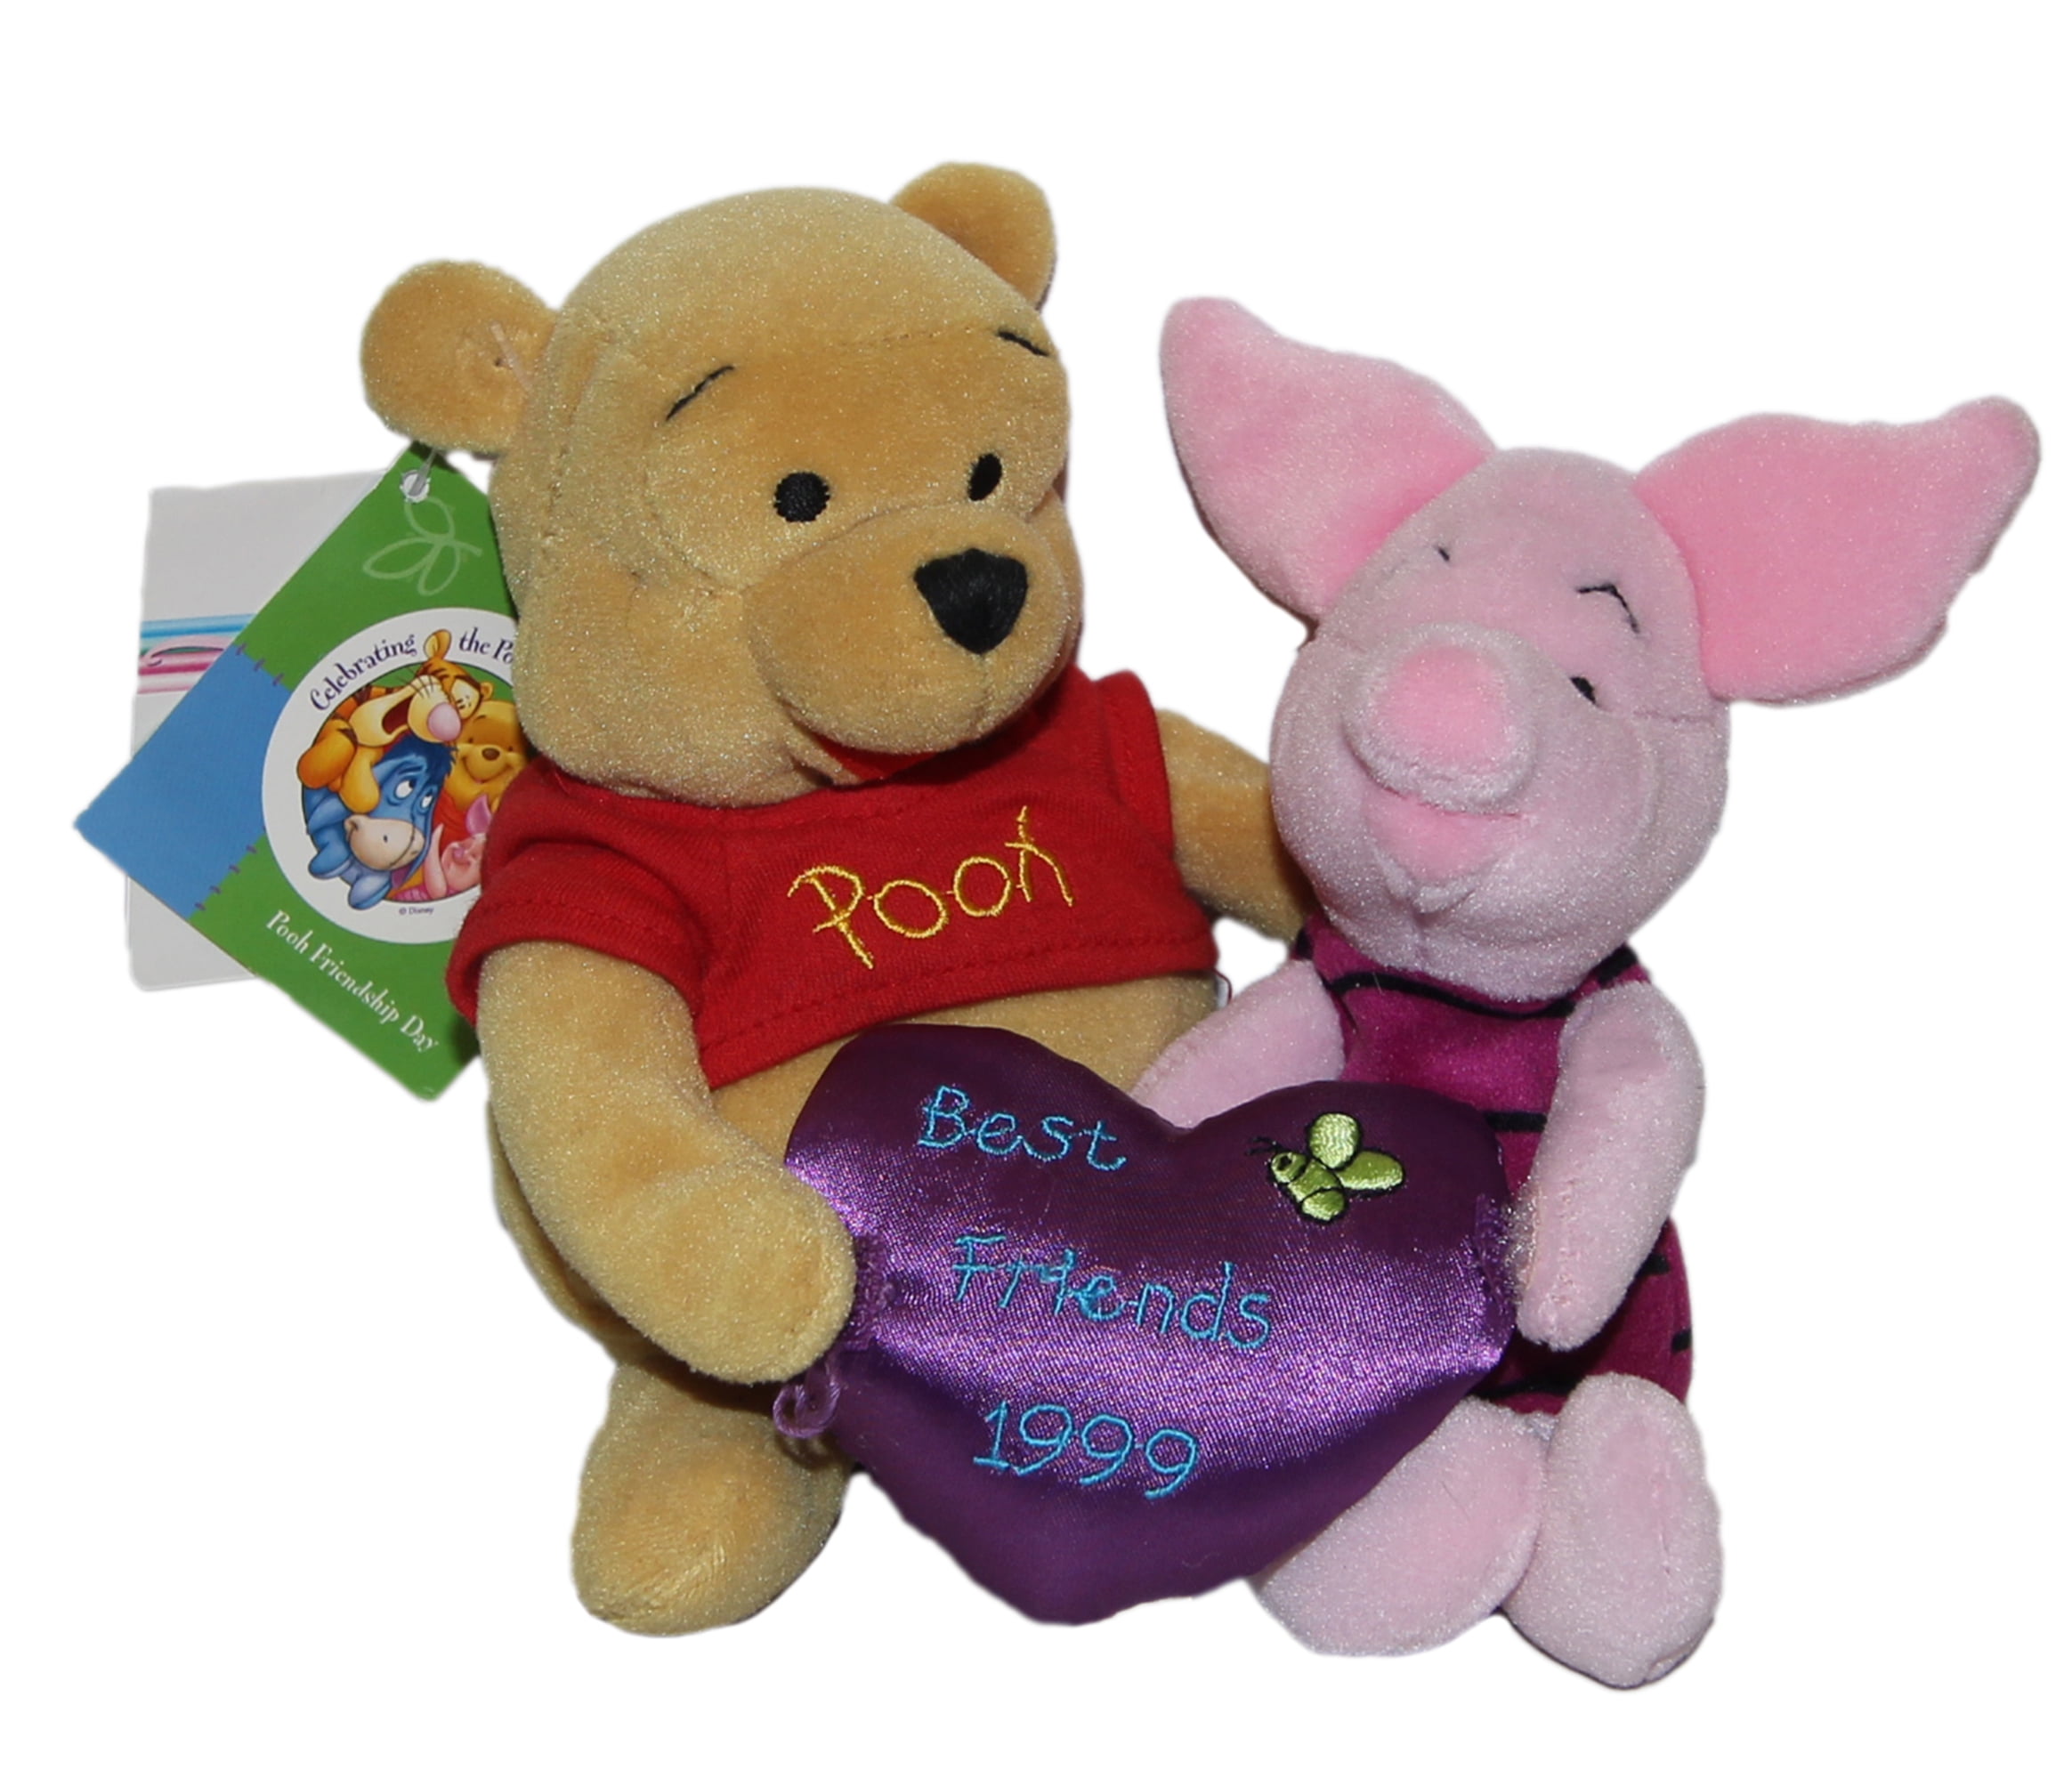 Disney Plush: Pooh Bear and Piglet - Best Friends | Stuffed Animal -  